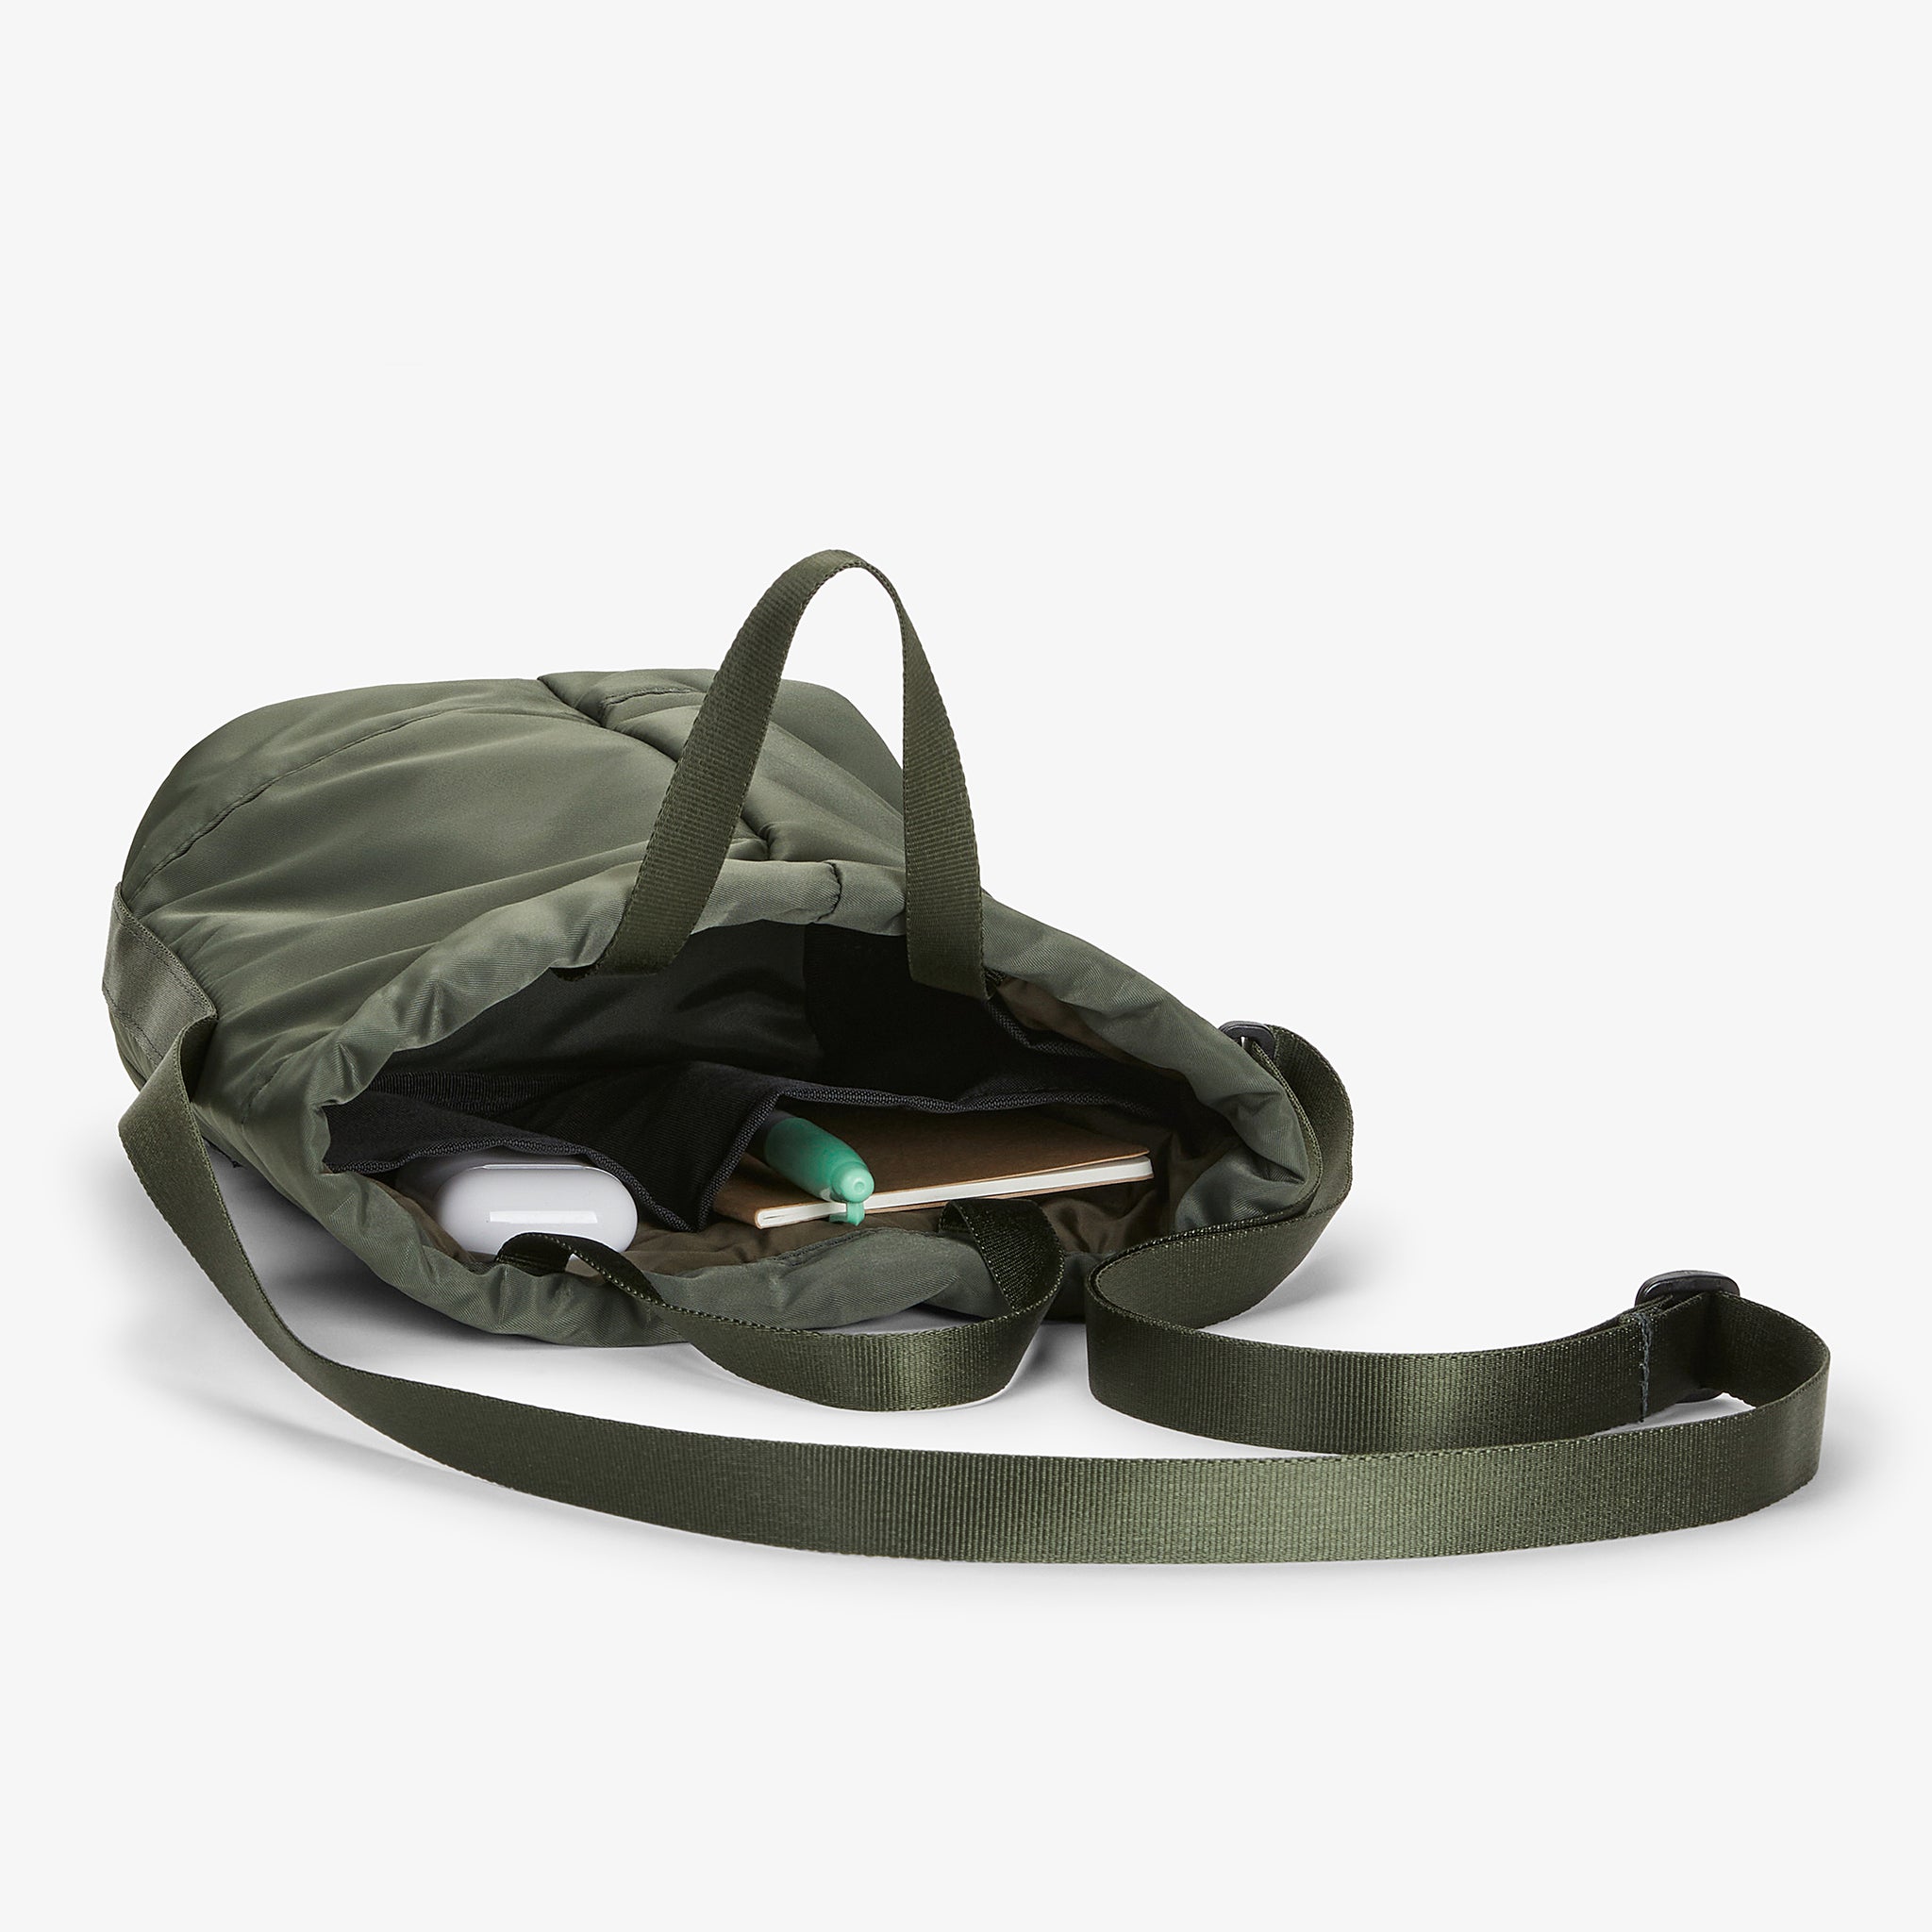 Packshot image of the Bags in Progress x MM Padded Mini Bucket Bag in Khaki Green